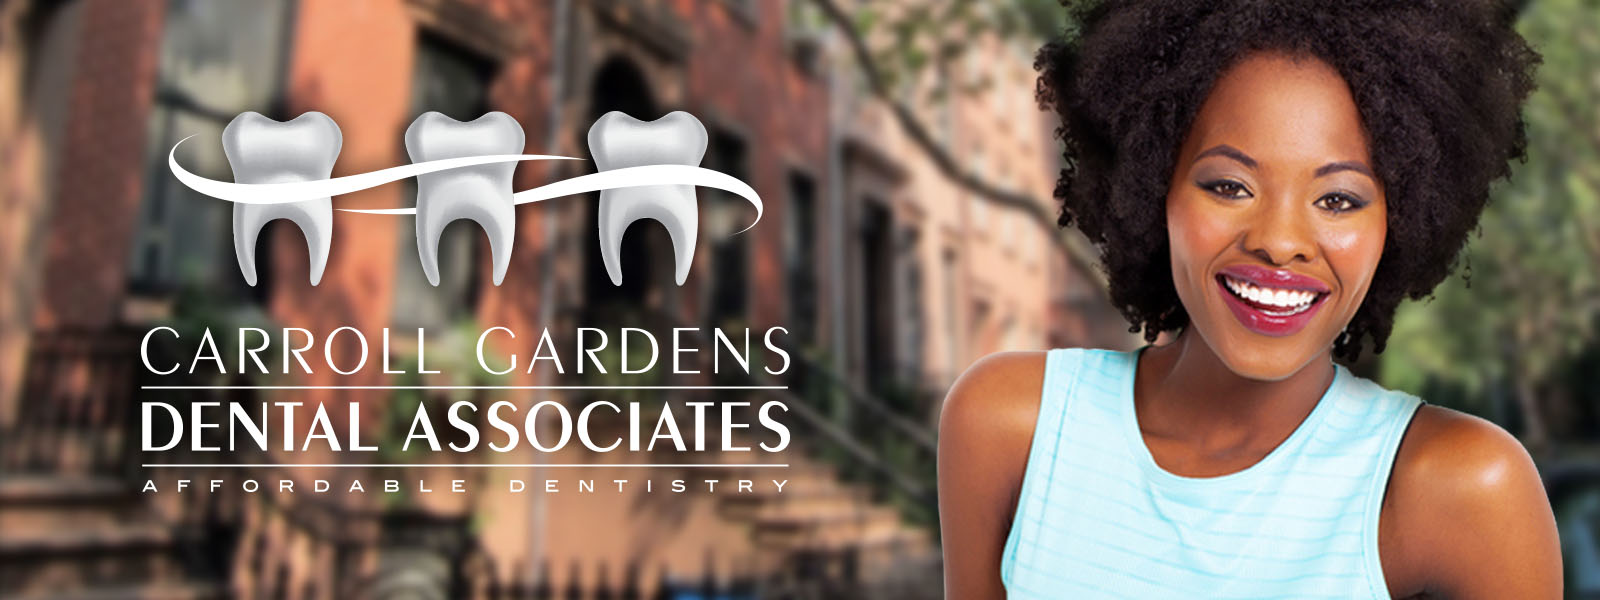 Carroll Gardens Dental Associates - Affordable Accessible Quality Dental Care - Carroll Gardens Brooklyn